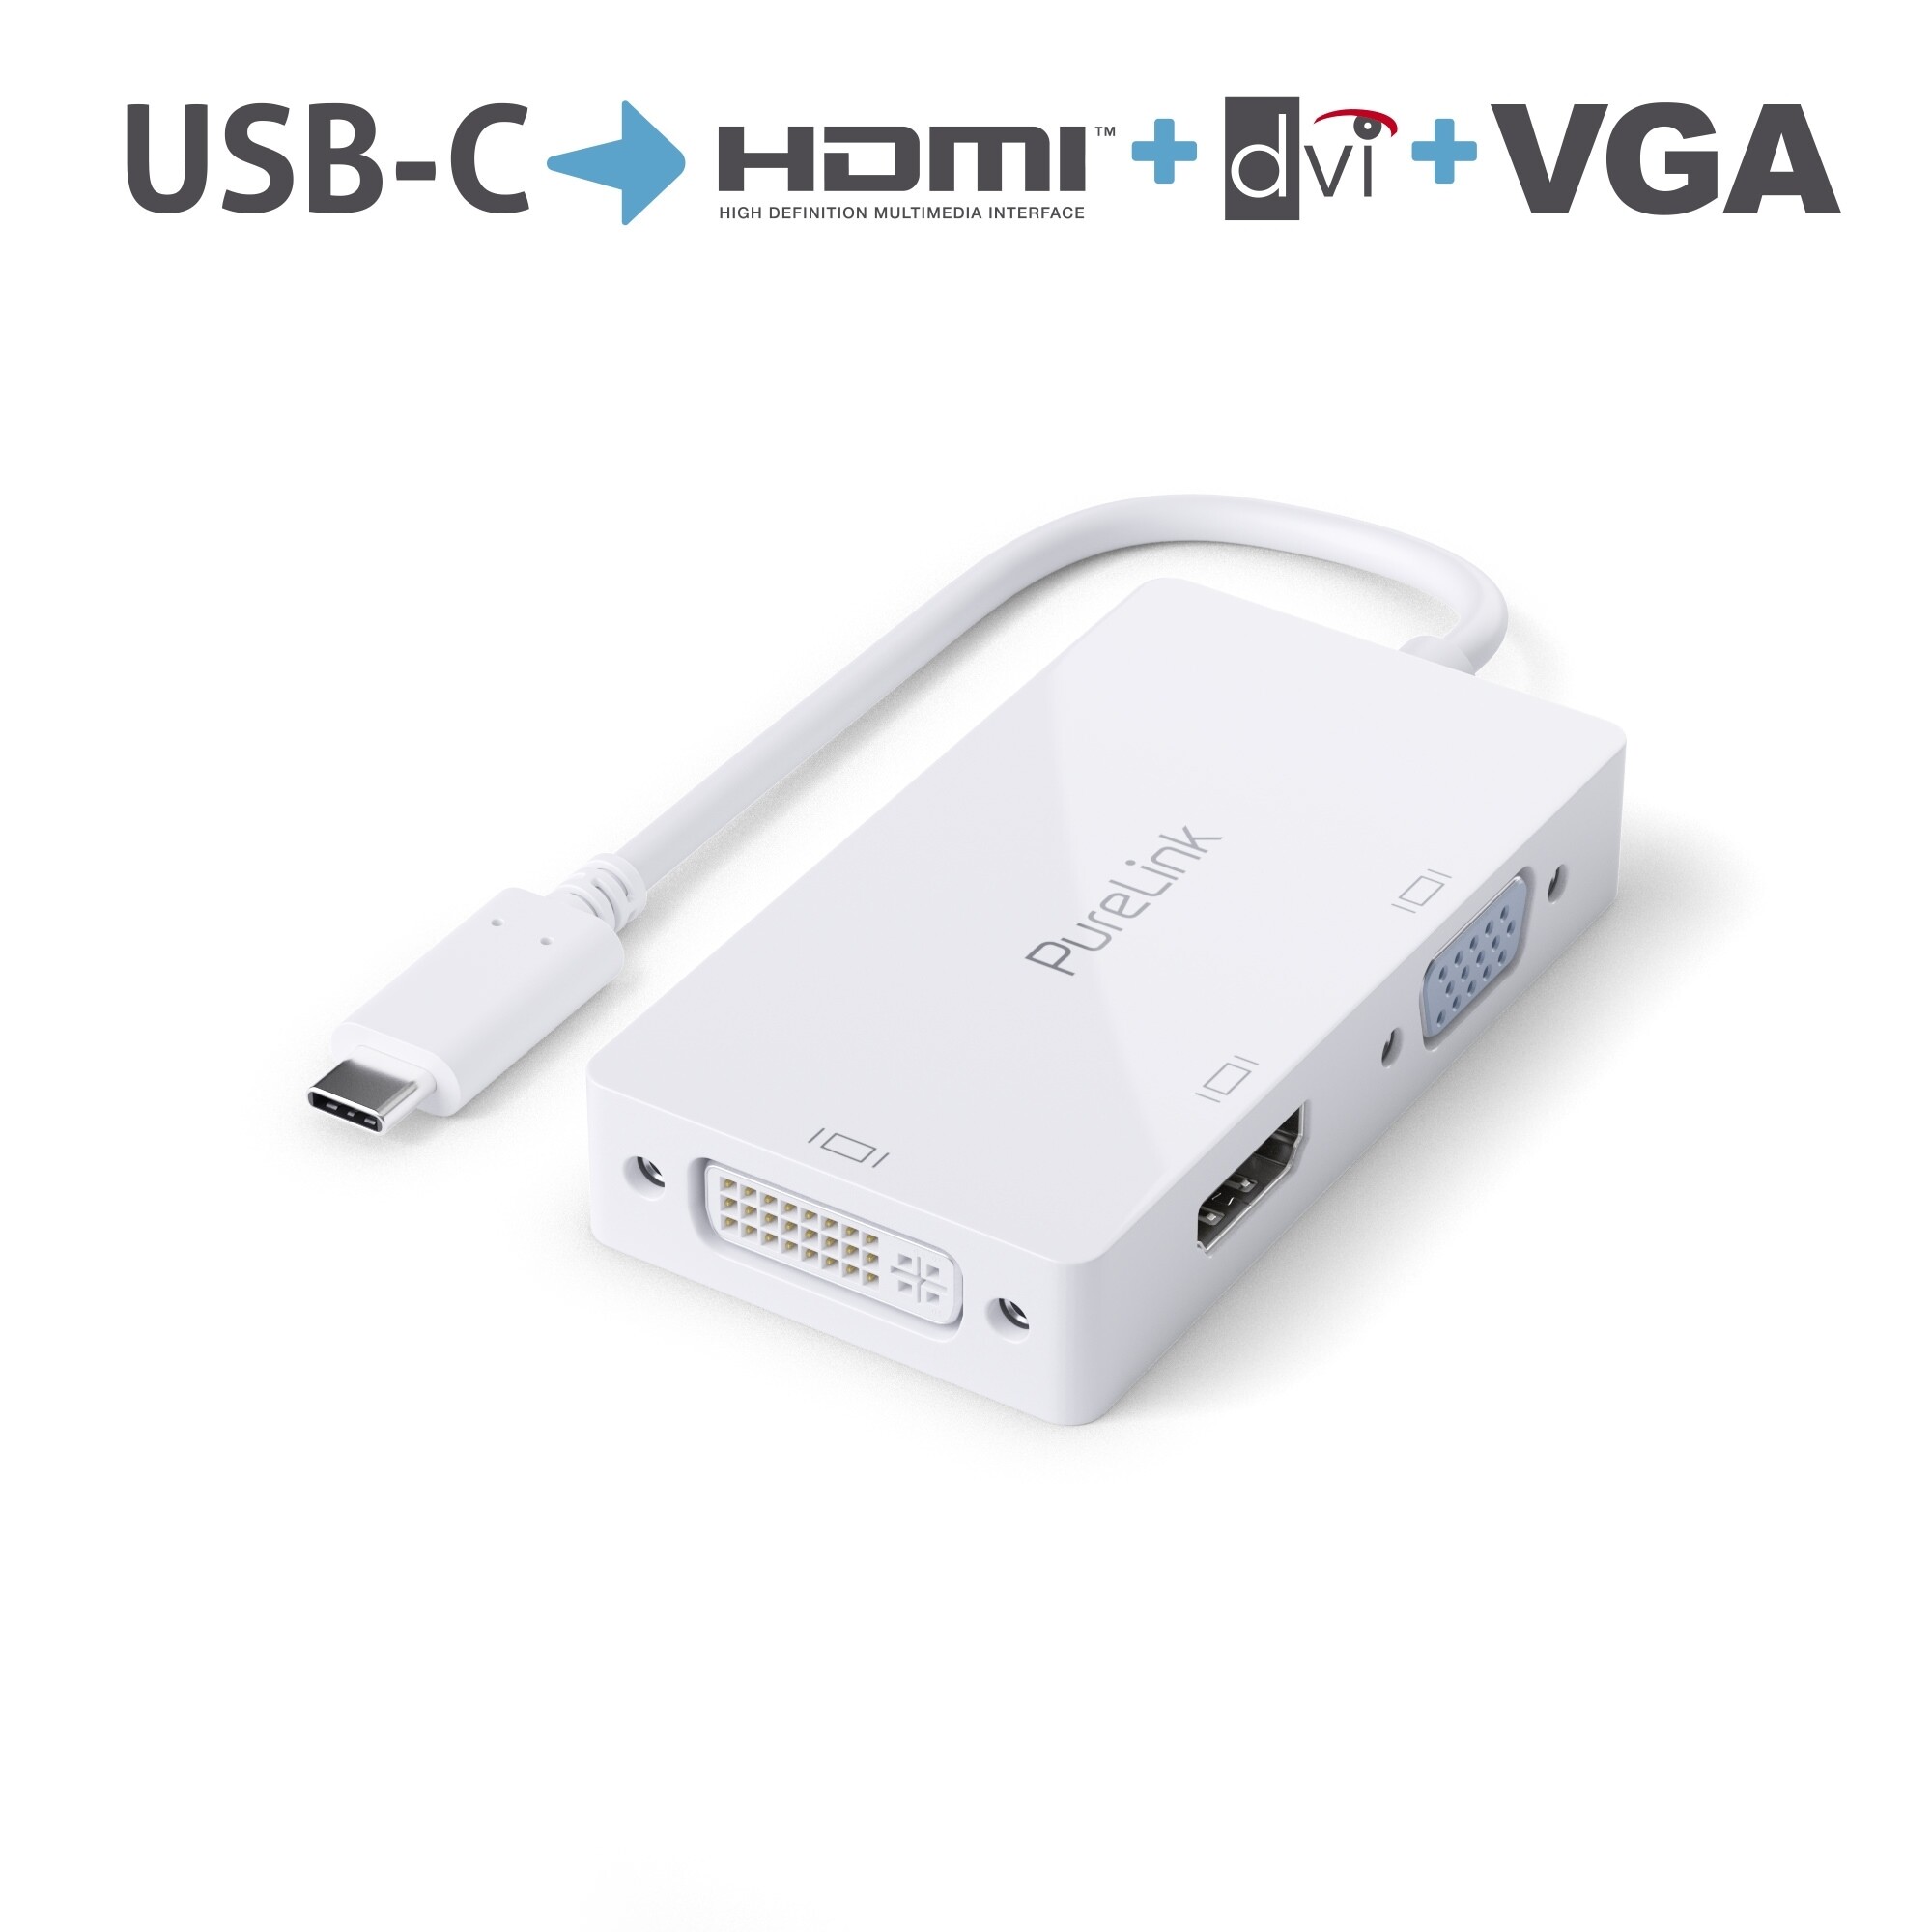 Purelink IS240 Adaptateur USB-C vers HDMI, DVI, VGA 0,10m blanc